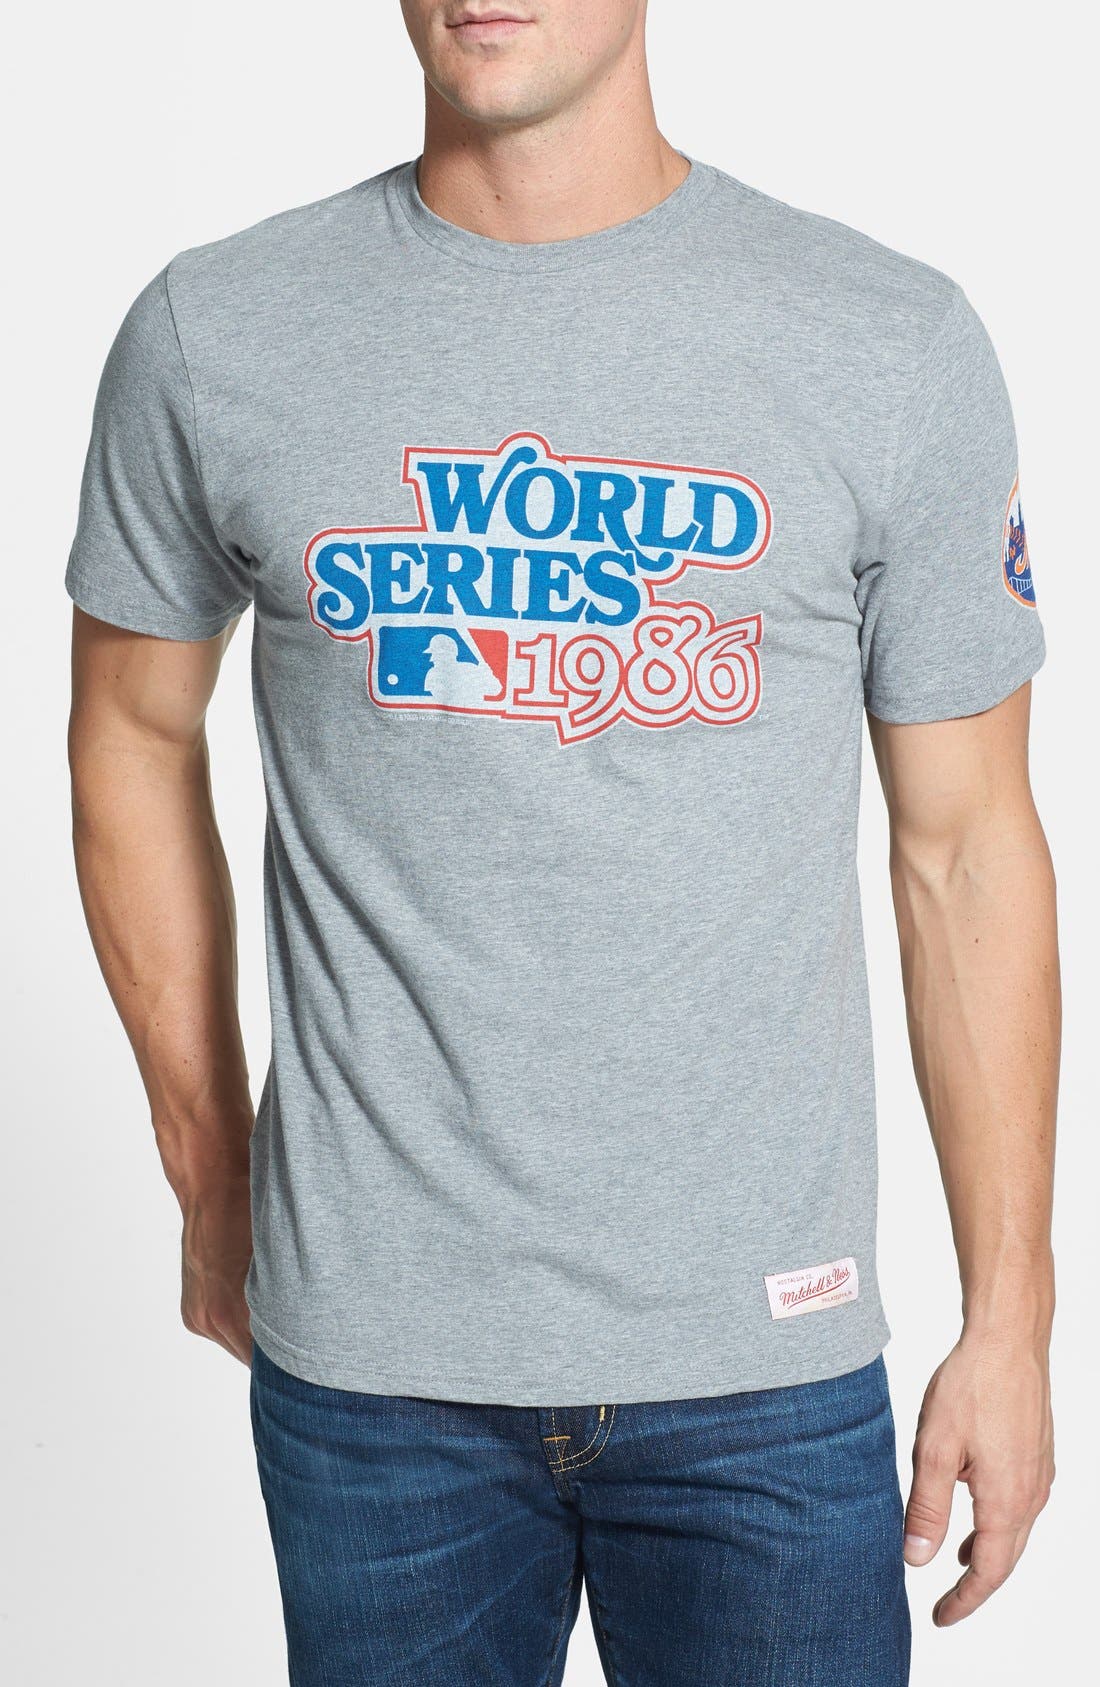 mets world series shirt